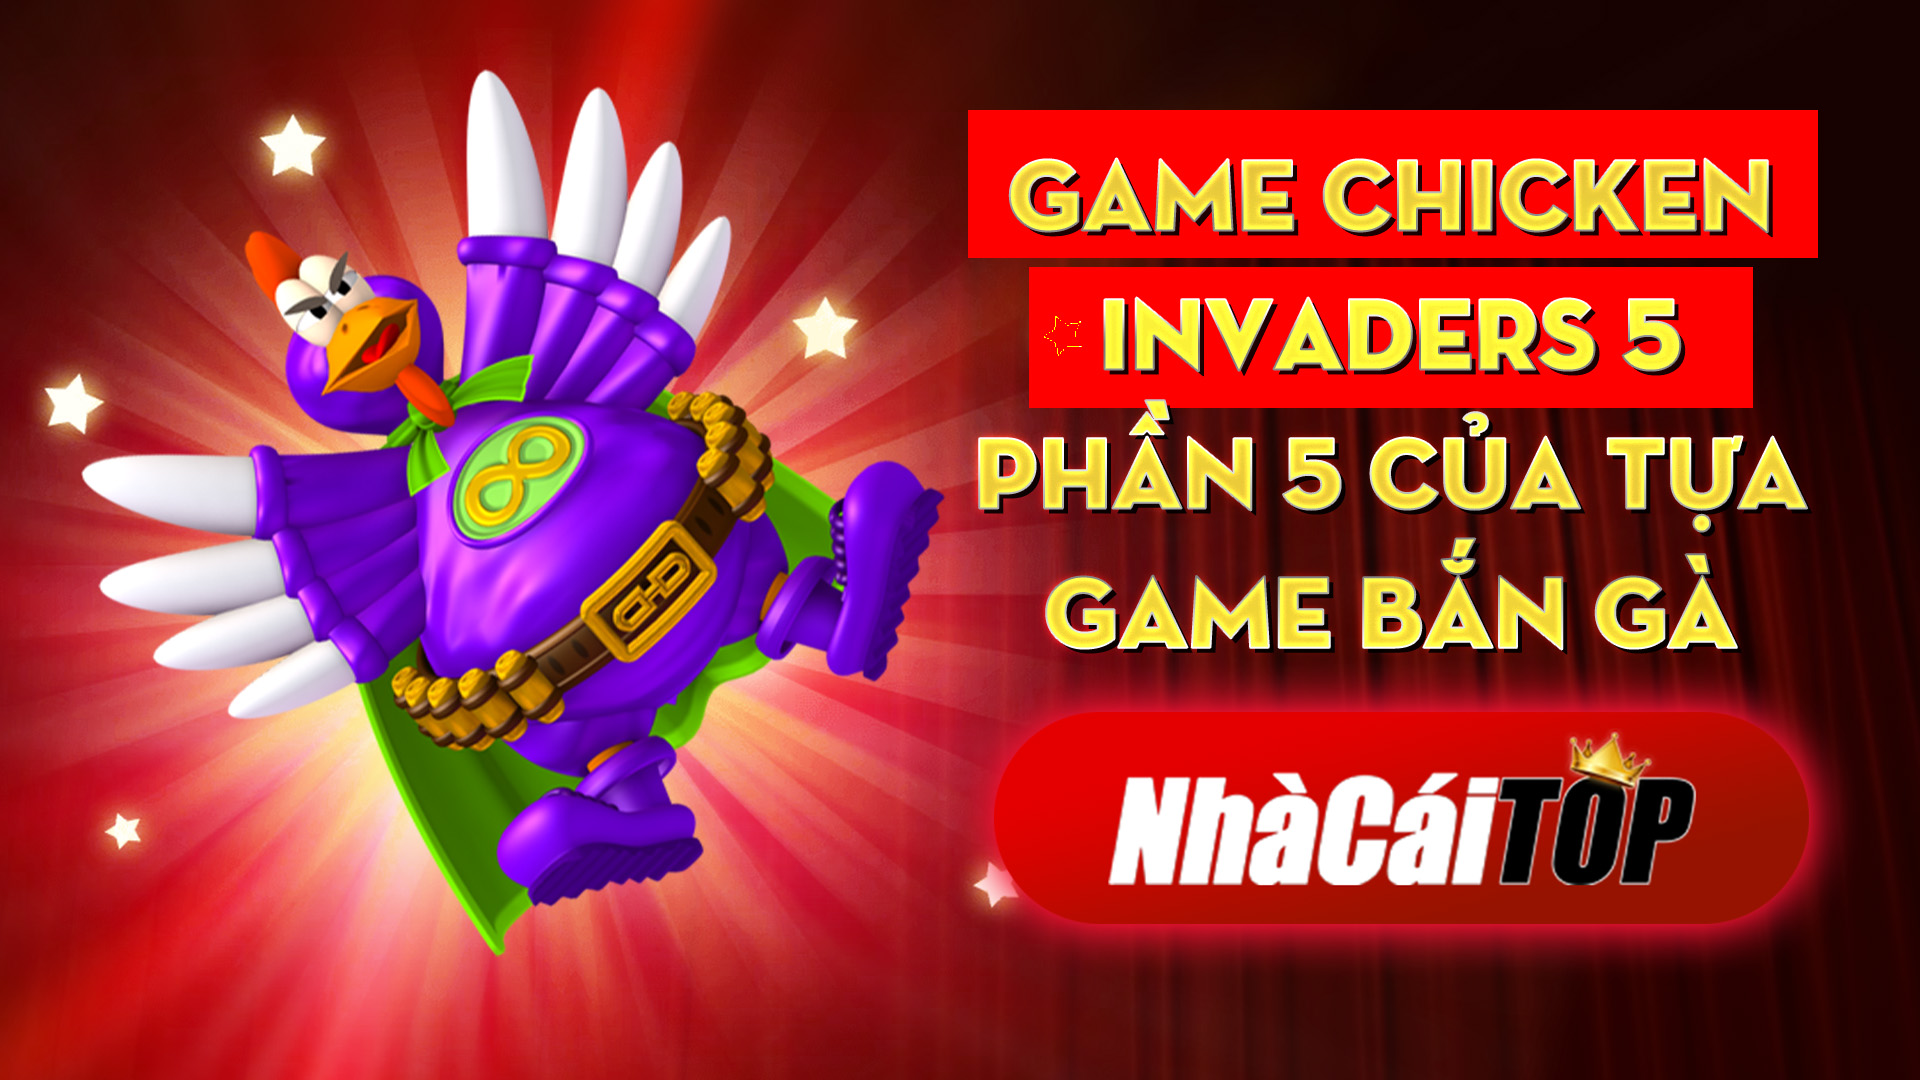 317 Game Chicken Invaders 5 – Phan 5 Cua Tua Game Ban Ga